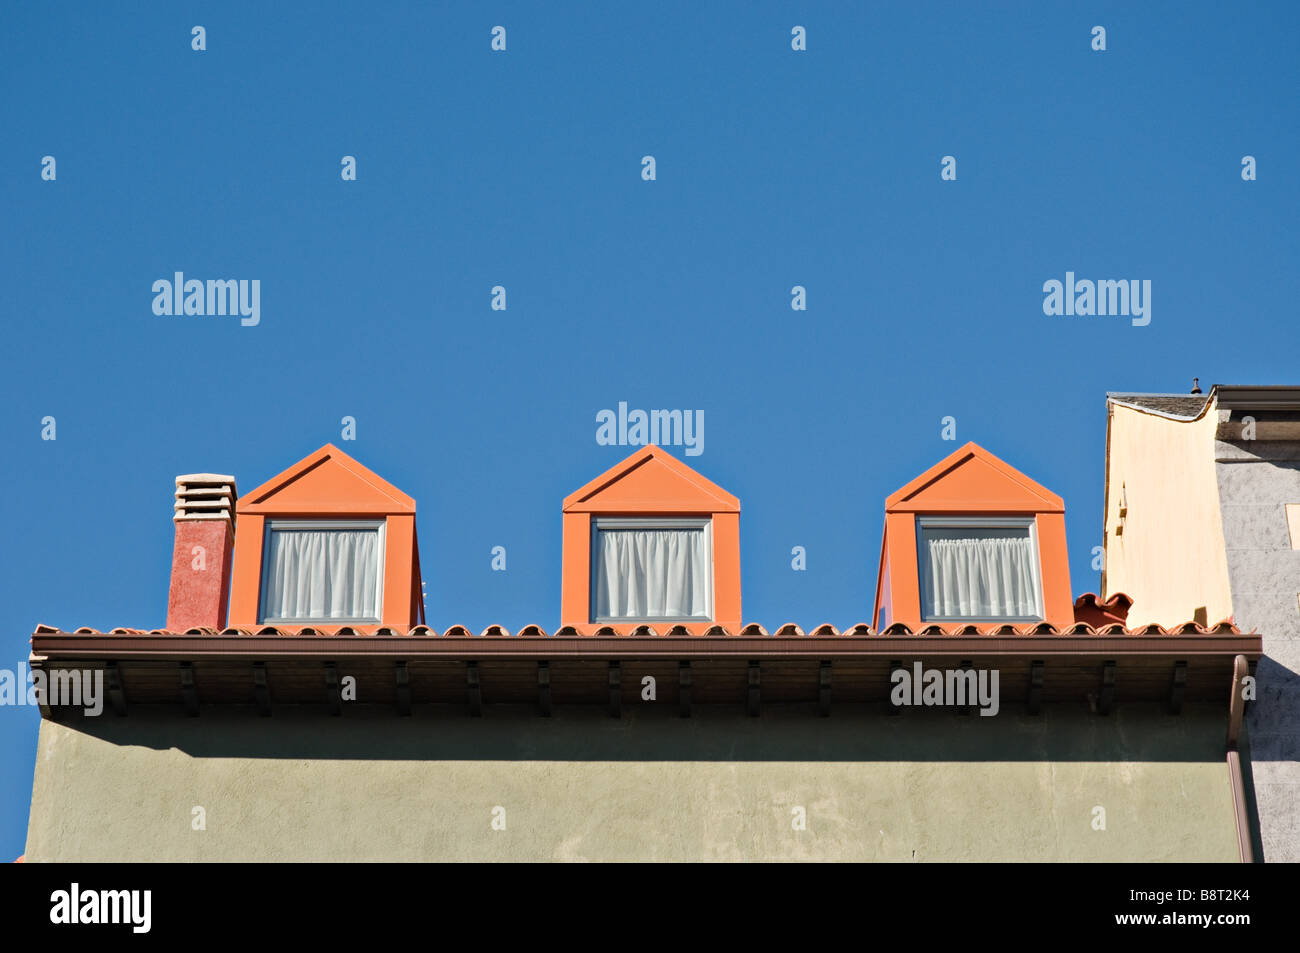 3 Orange pointy windows against a blue sky Stock Photo